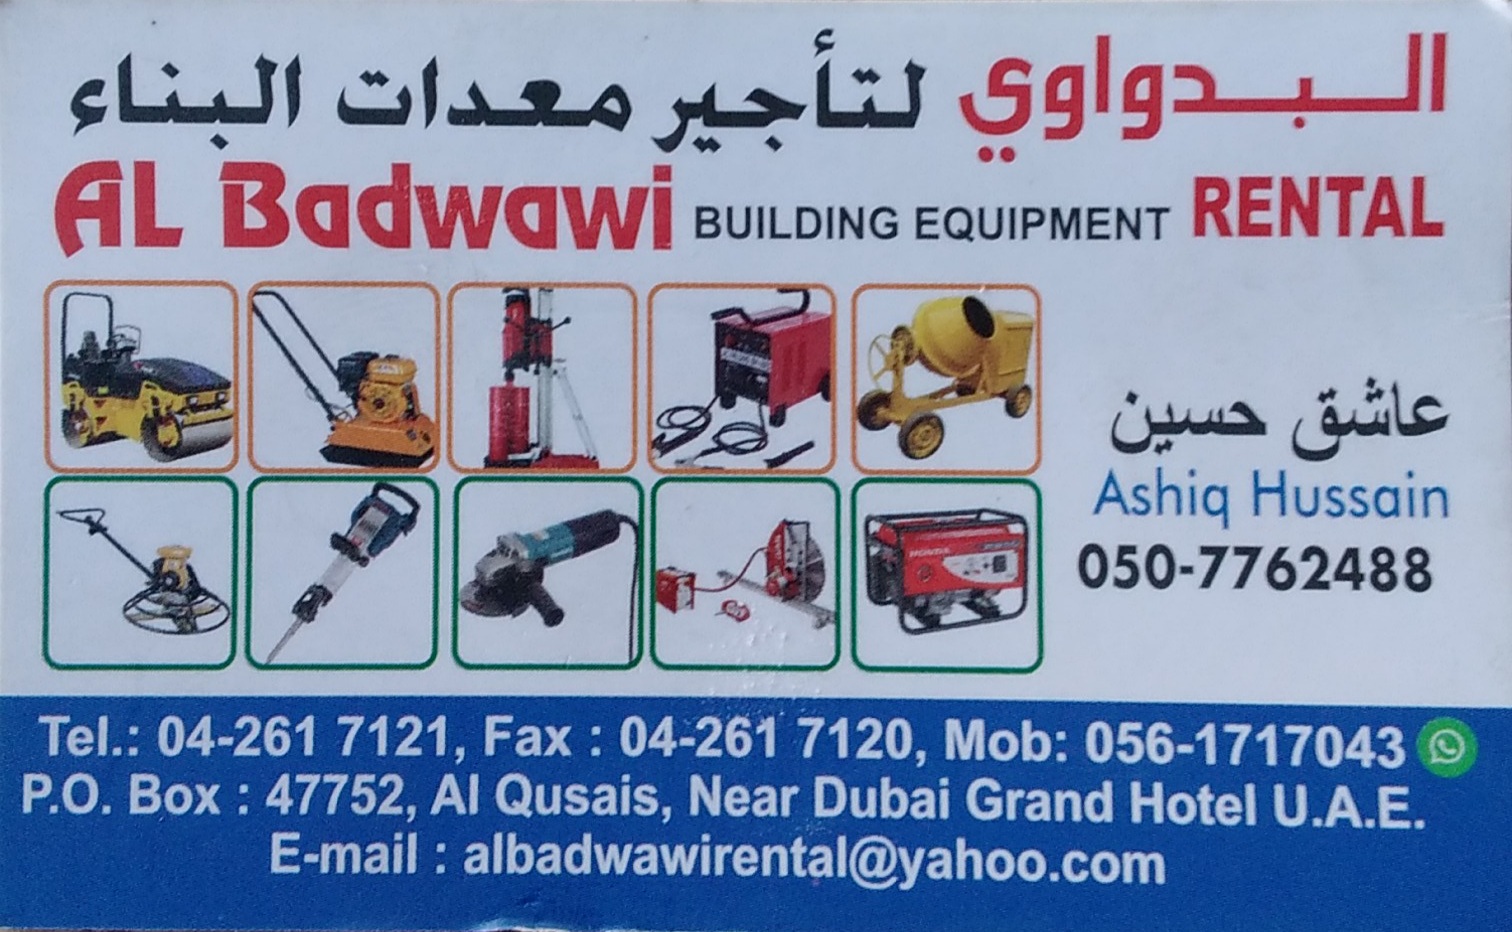 AL Badwawi Building Equipment Rental